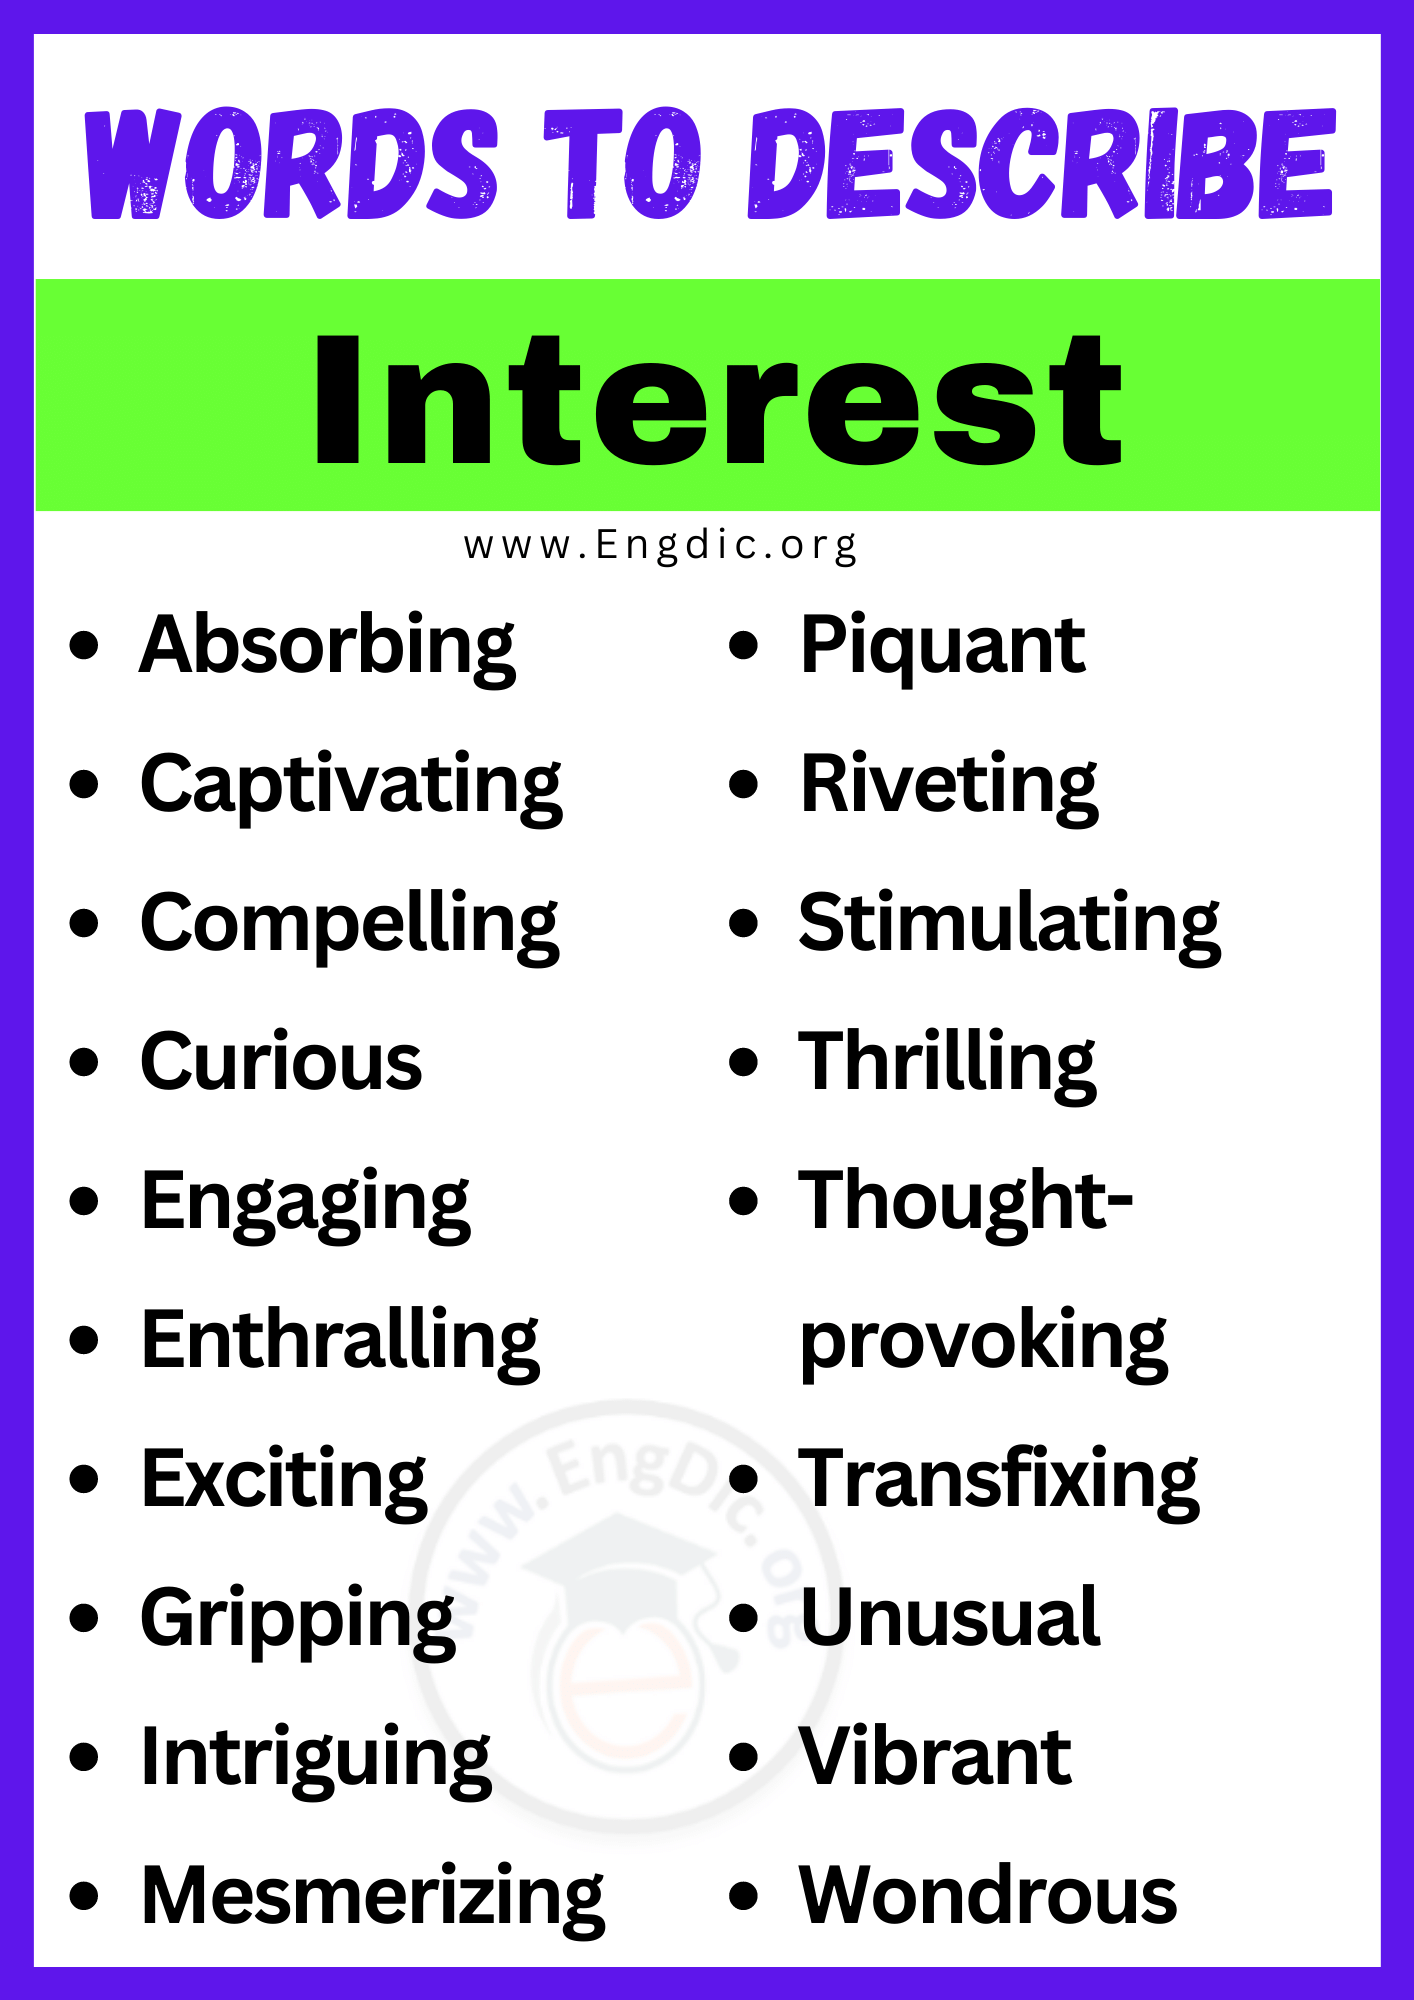 Words to Describe Interest